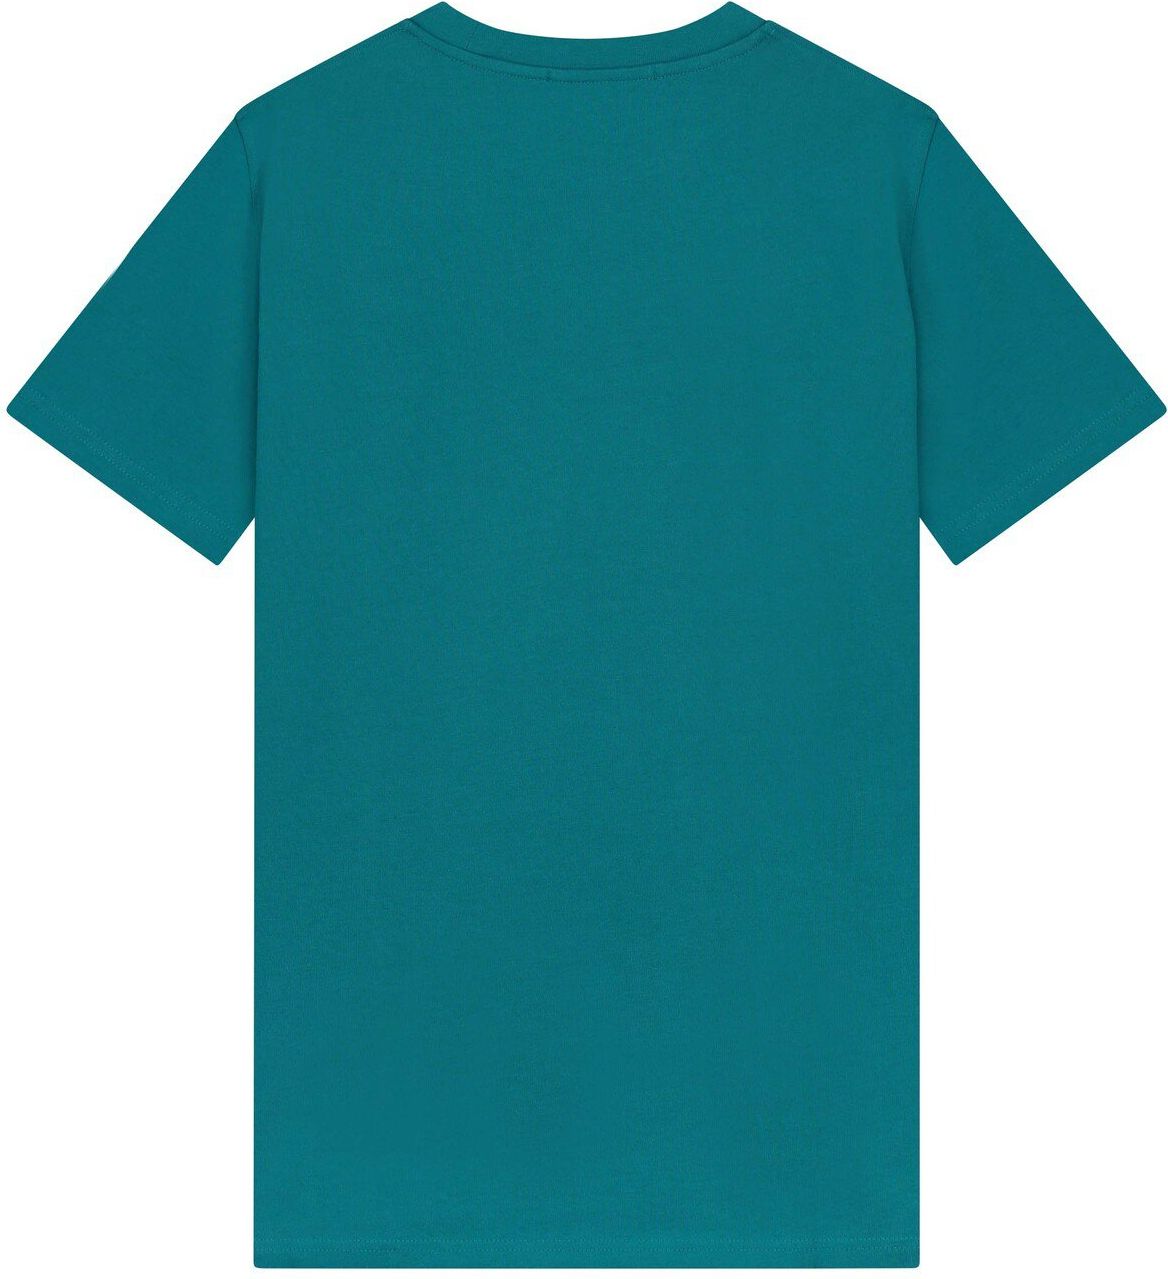 Malelions Dreamhunter T-Shirt - Teal/White Blauw